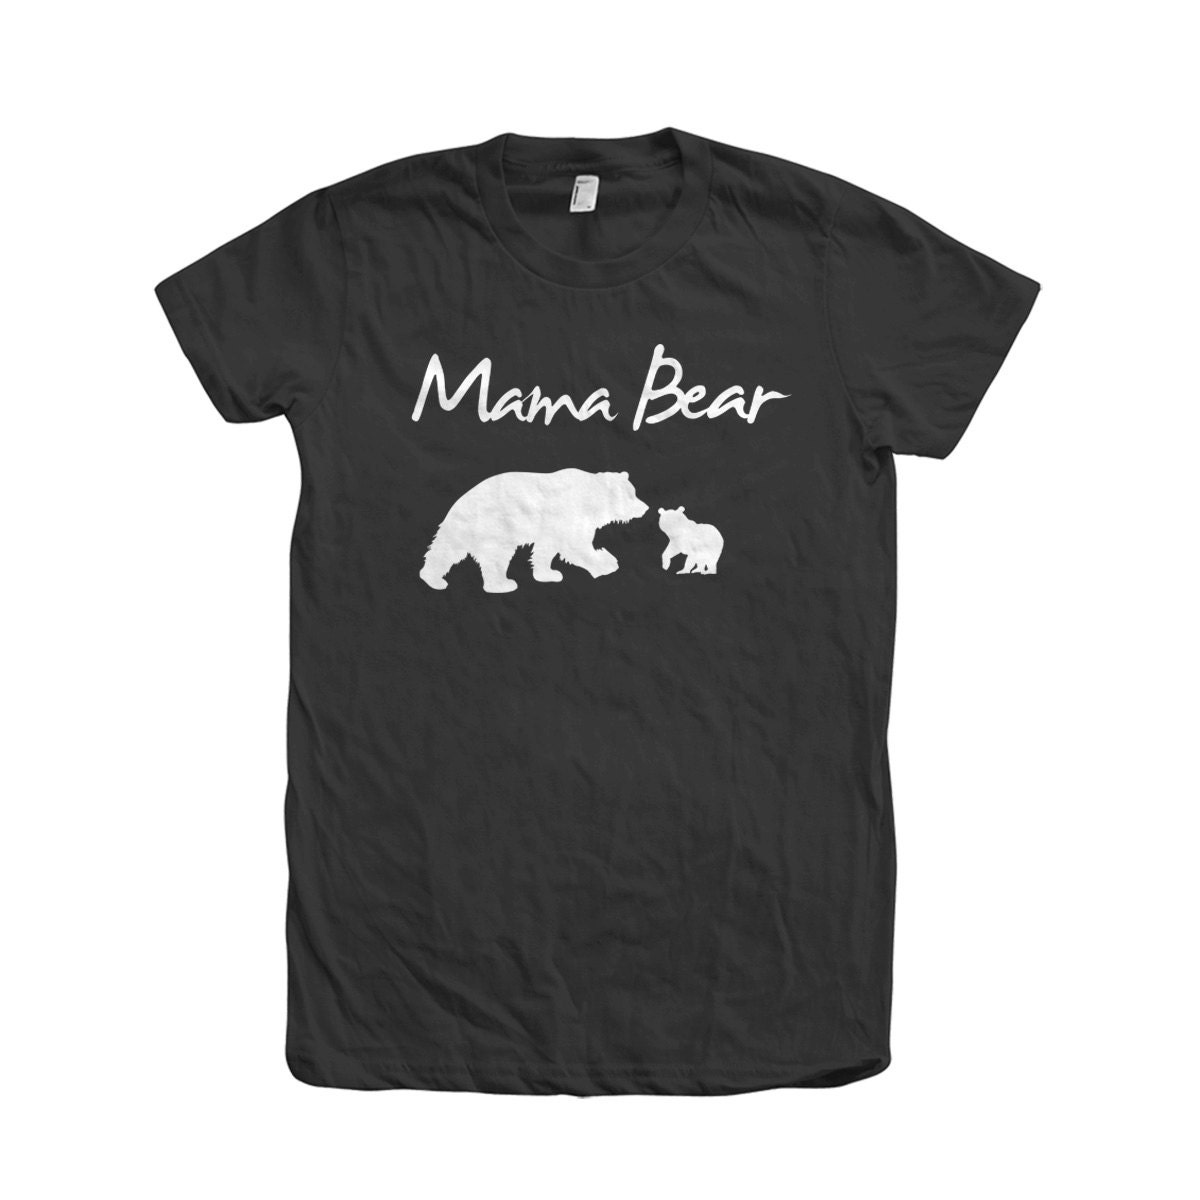 Mom Mama Bear Hand Screen Print American Apparel Crew Neck Tshirt 100% Cotton Graphic Tee